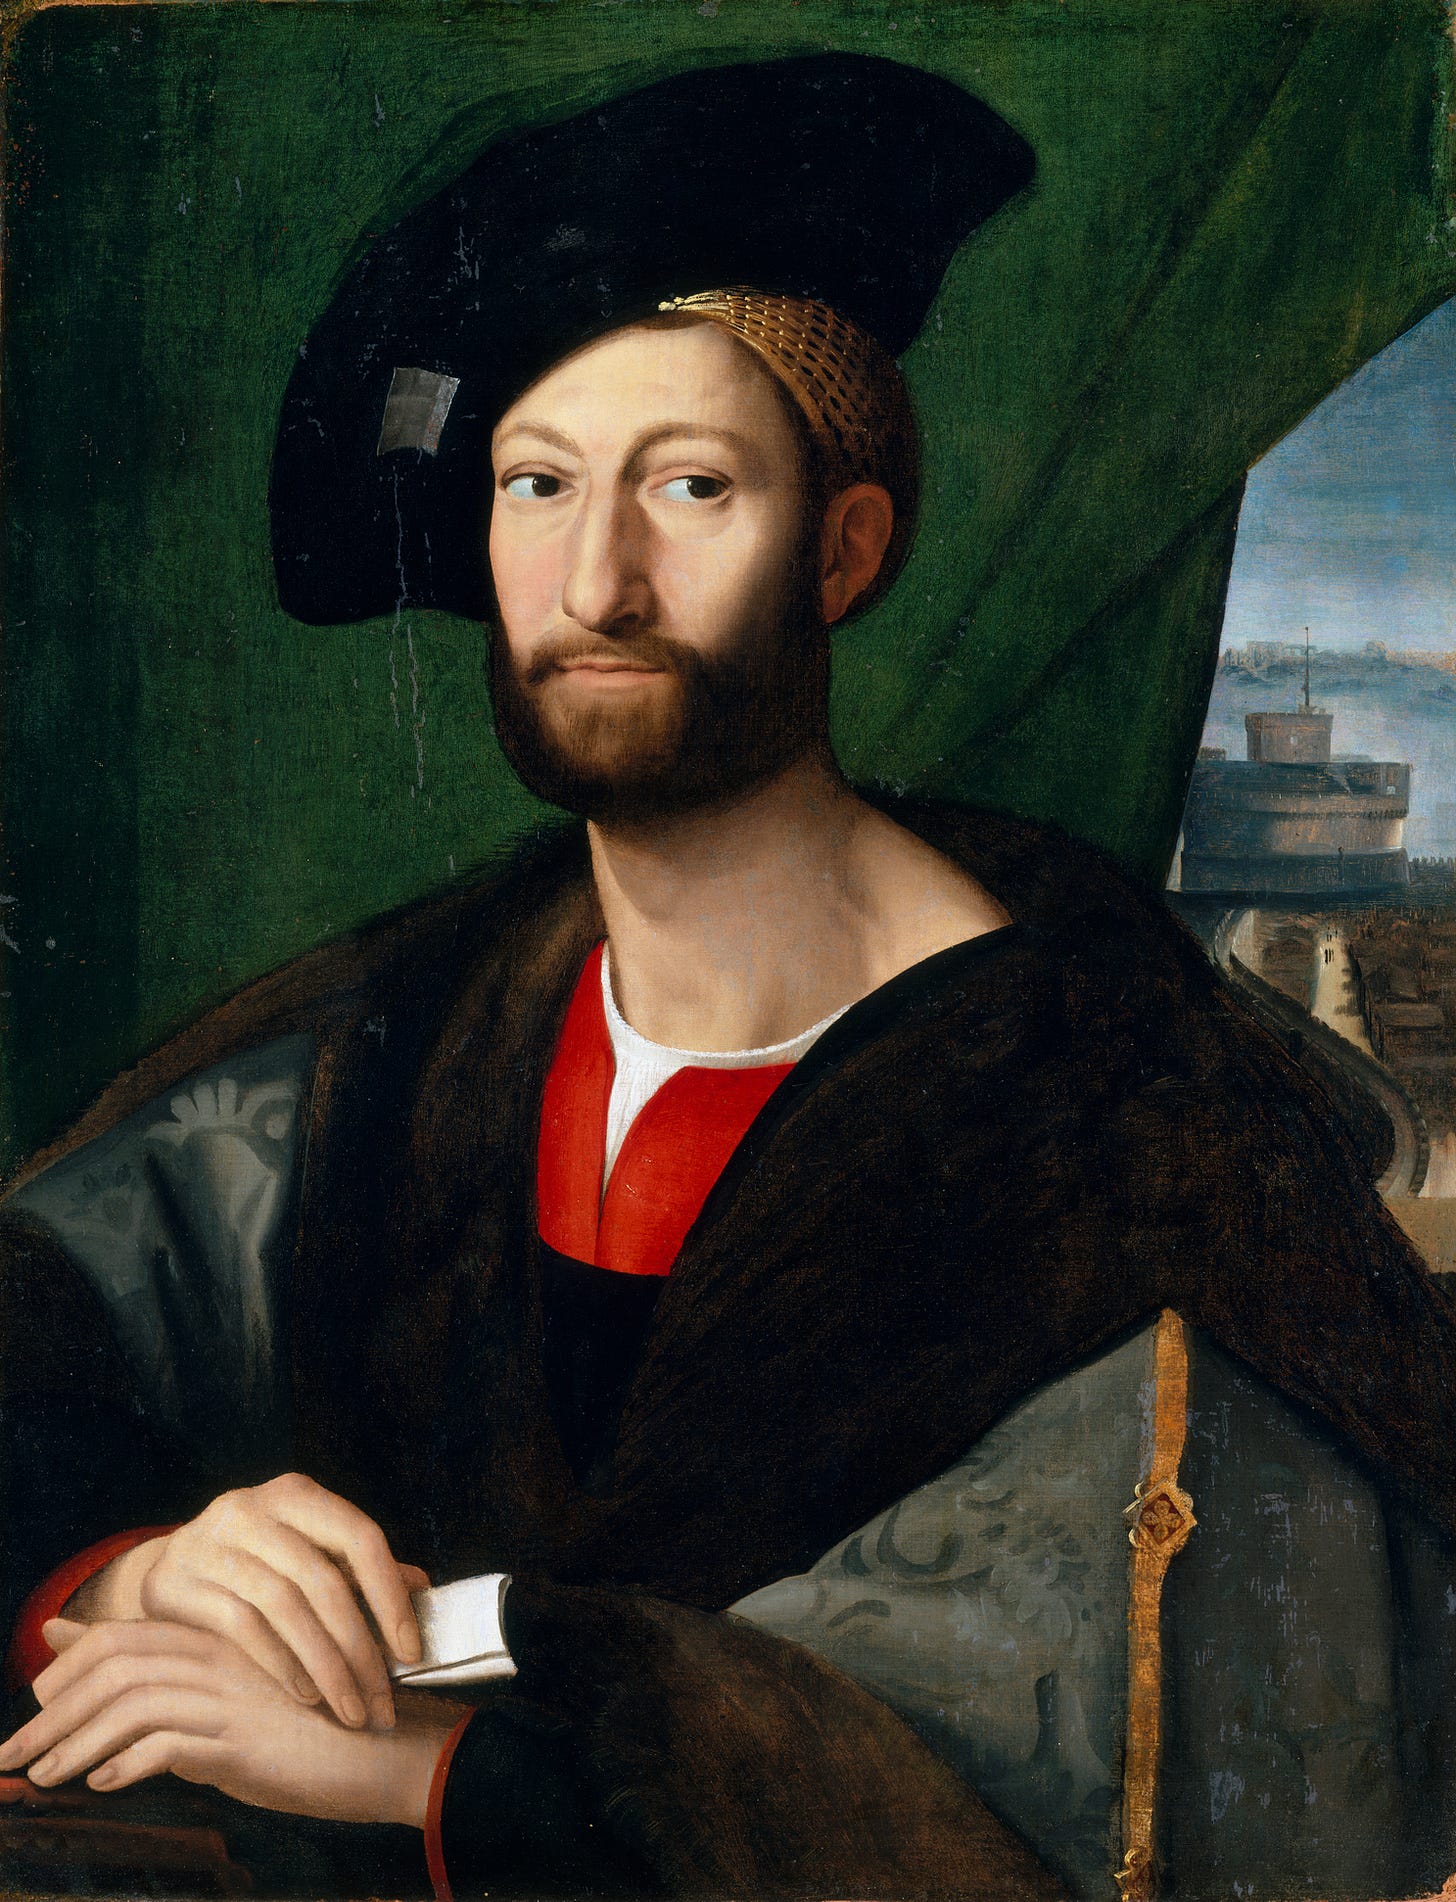 Giuliano de' Medici, Duke of Nemours - Wikipedia